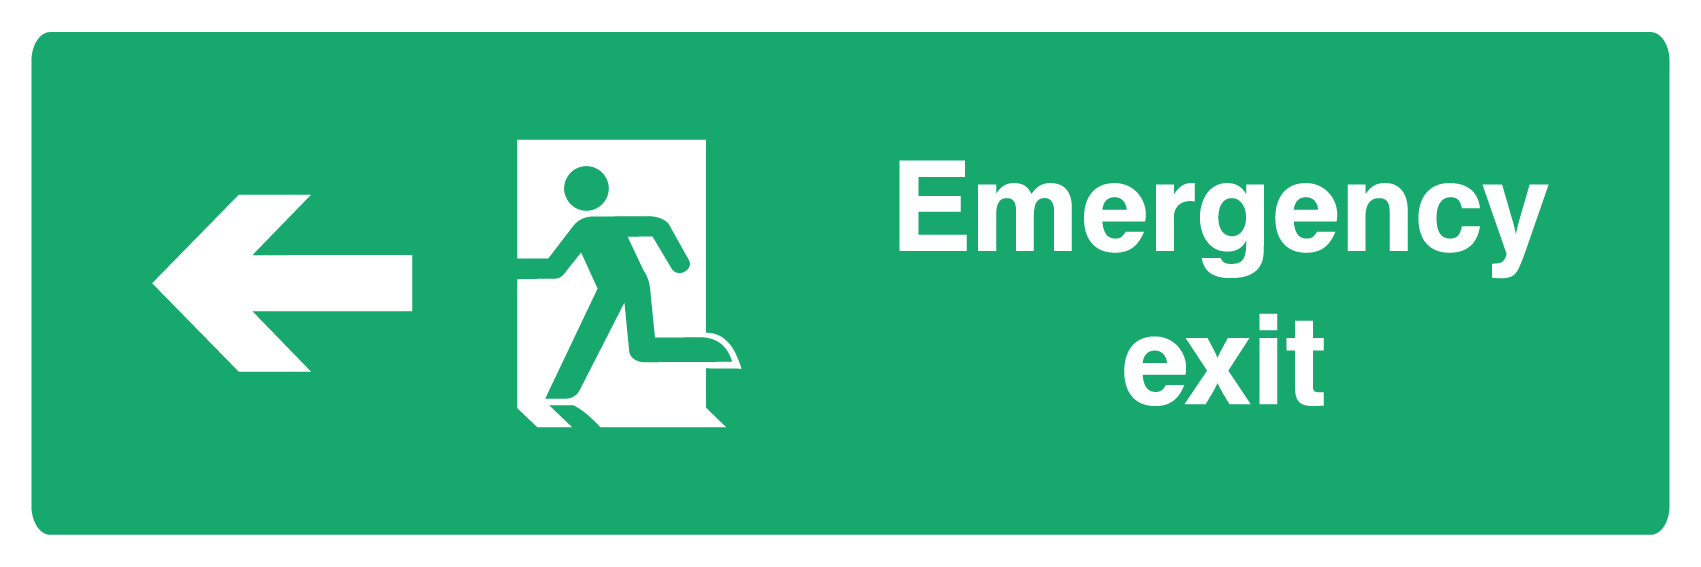 Exit 8 играть. Emergency exit. Знак «exit». Emergency exit вывеска.